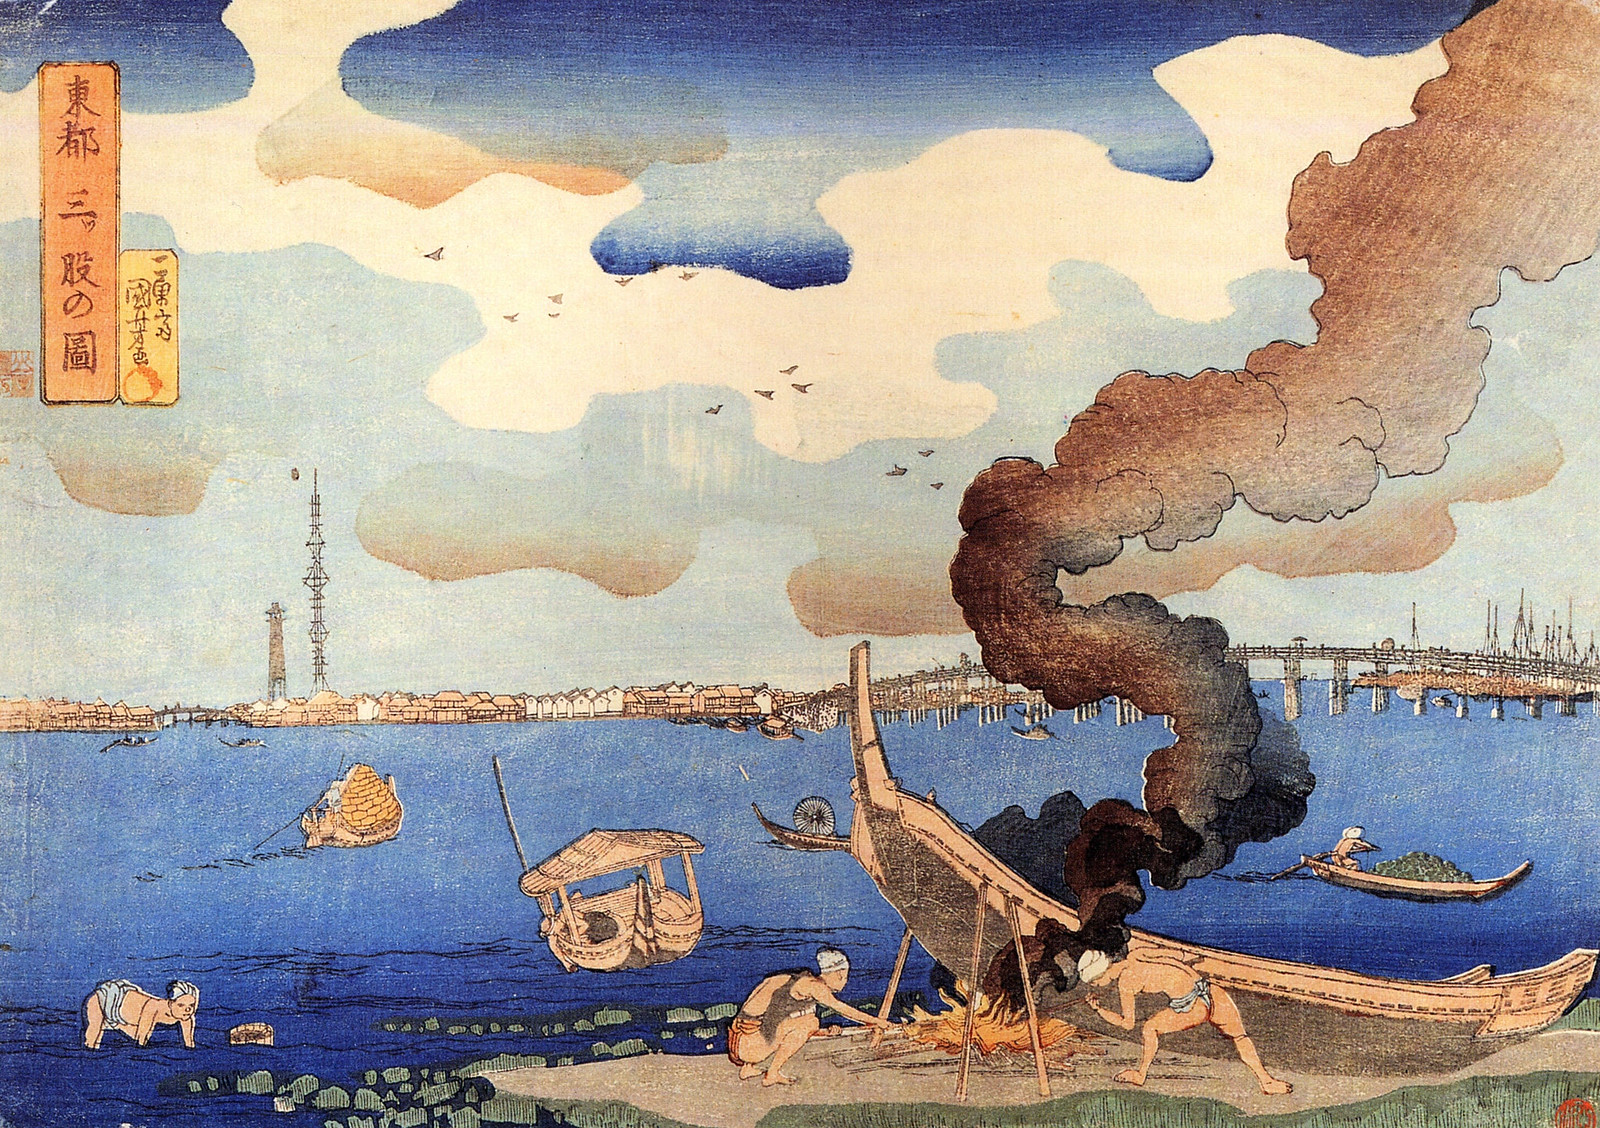 Tokyo Skytree predicted 180 years back? 東都三ツ股の図, the woodblock print by Utagawa Kuniyoshi with the Skytree on extreme left